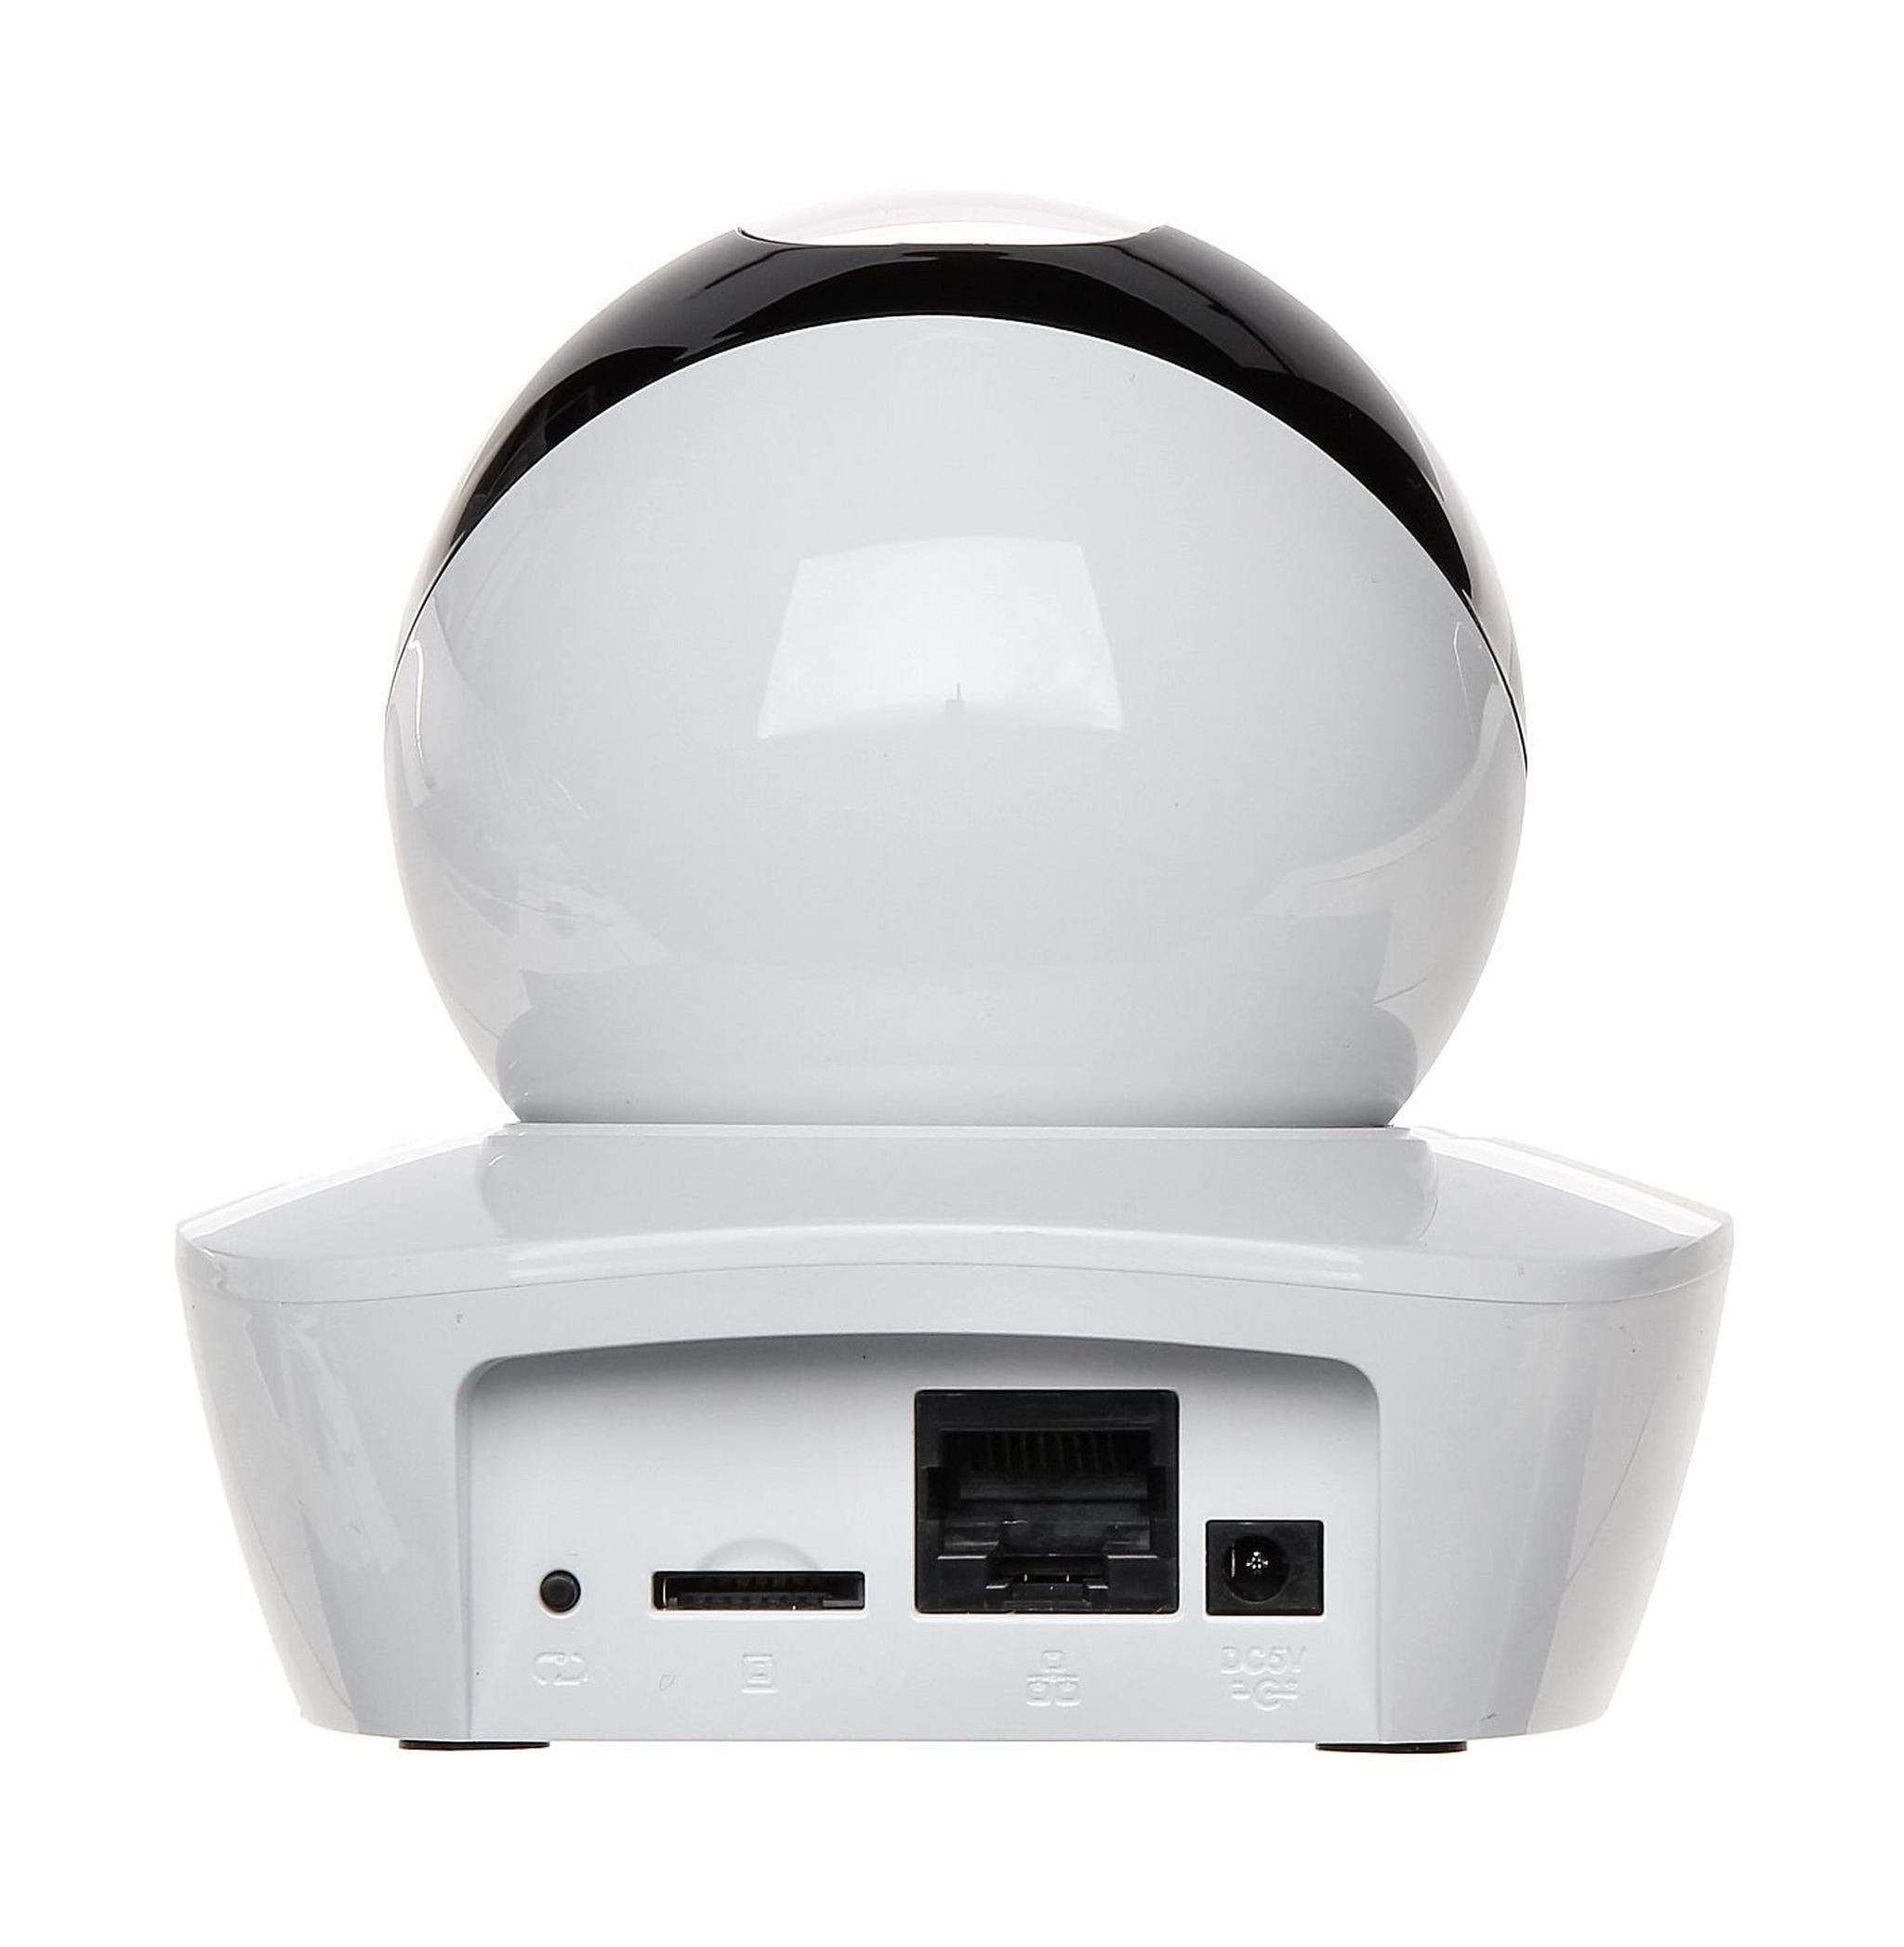 Dahua Wi-Fi Indoor Security Camera, DH-IPC-A46P - White